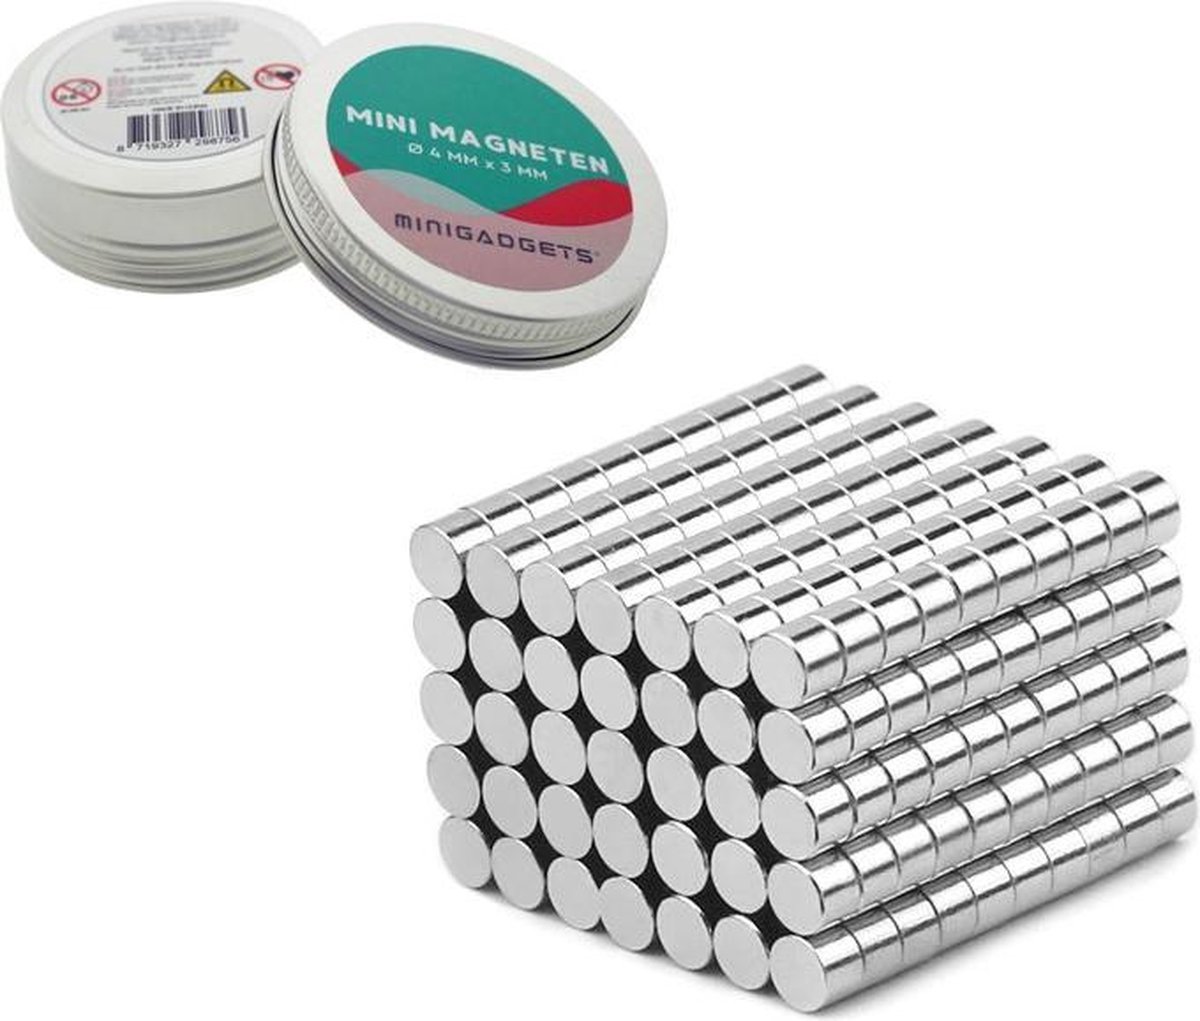 Super sterke magneten - 4 x 3 mm (25-stuks) - Rond - Neodymium - Koelkast magneten - Whiteboard magneten – Klein - Ronde - 4x3mm - Minigadgets